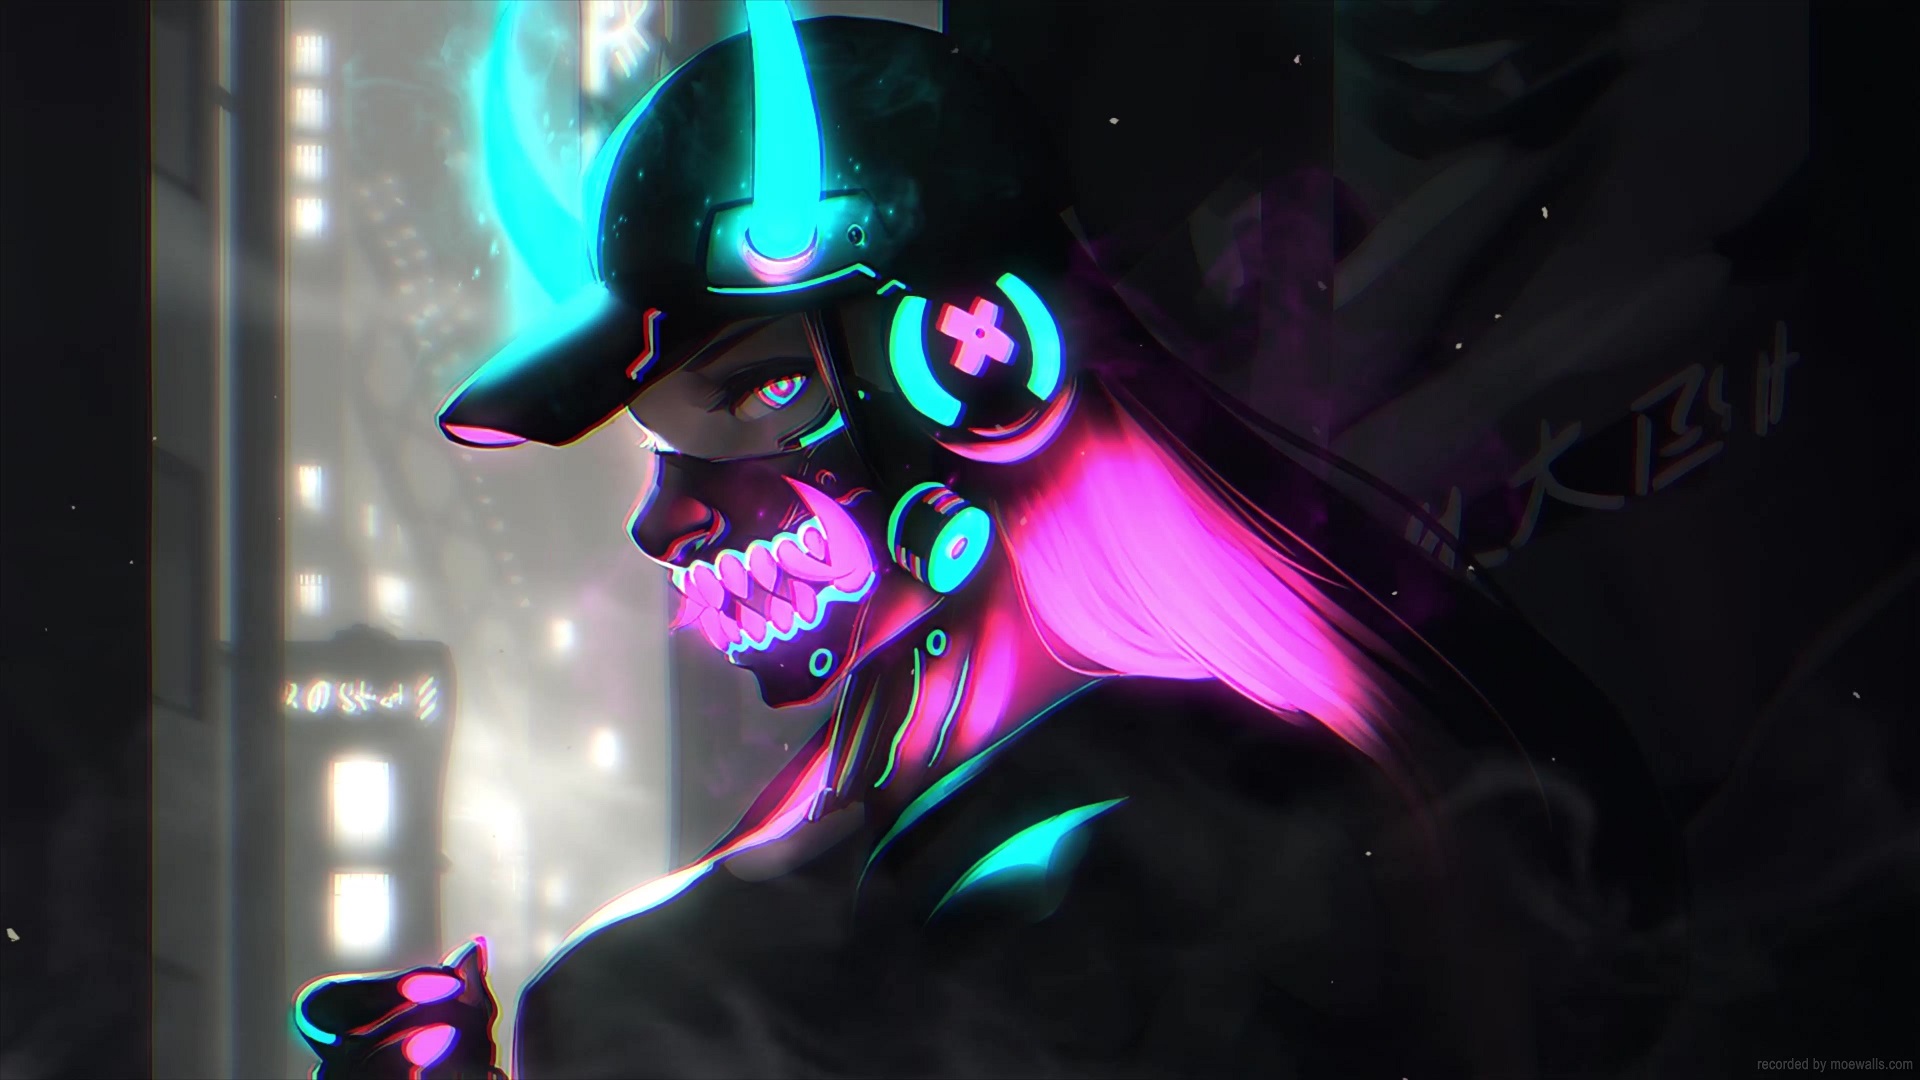 Cyberpunk Reptilian with Neon Eyes Live Wallpaper - download